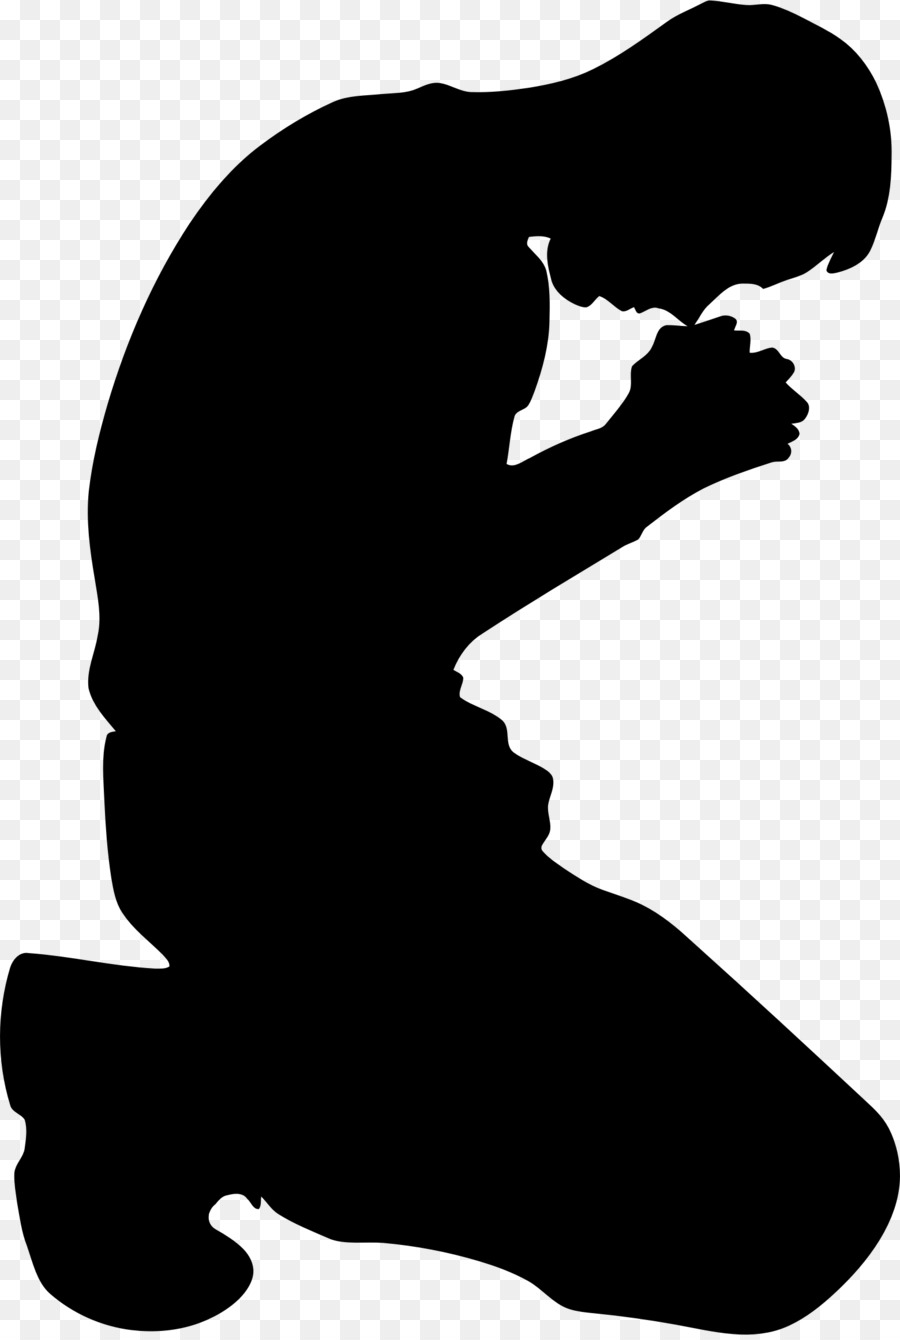 Praying Hands Kneeling Silhouette Clip art - volunteer png download - 1560*2314 - Free Transparent Praying Hands png Download.